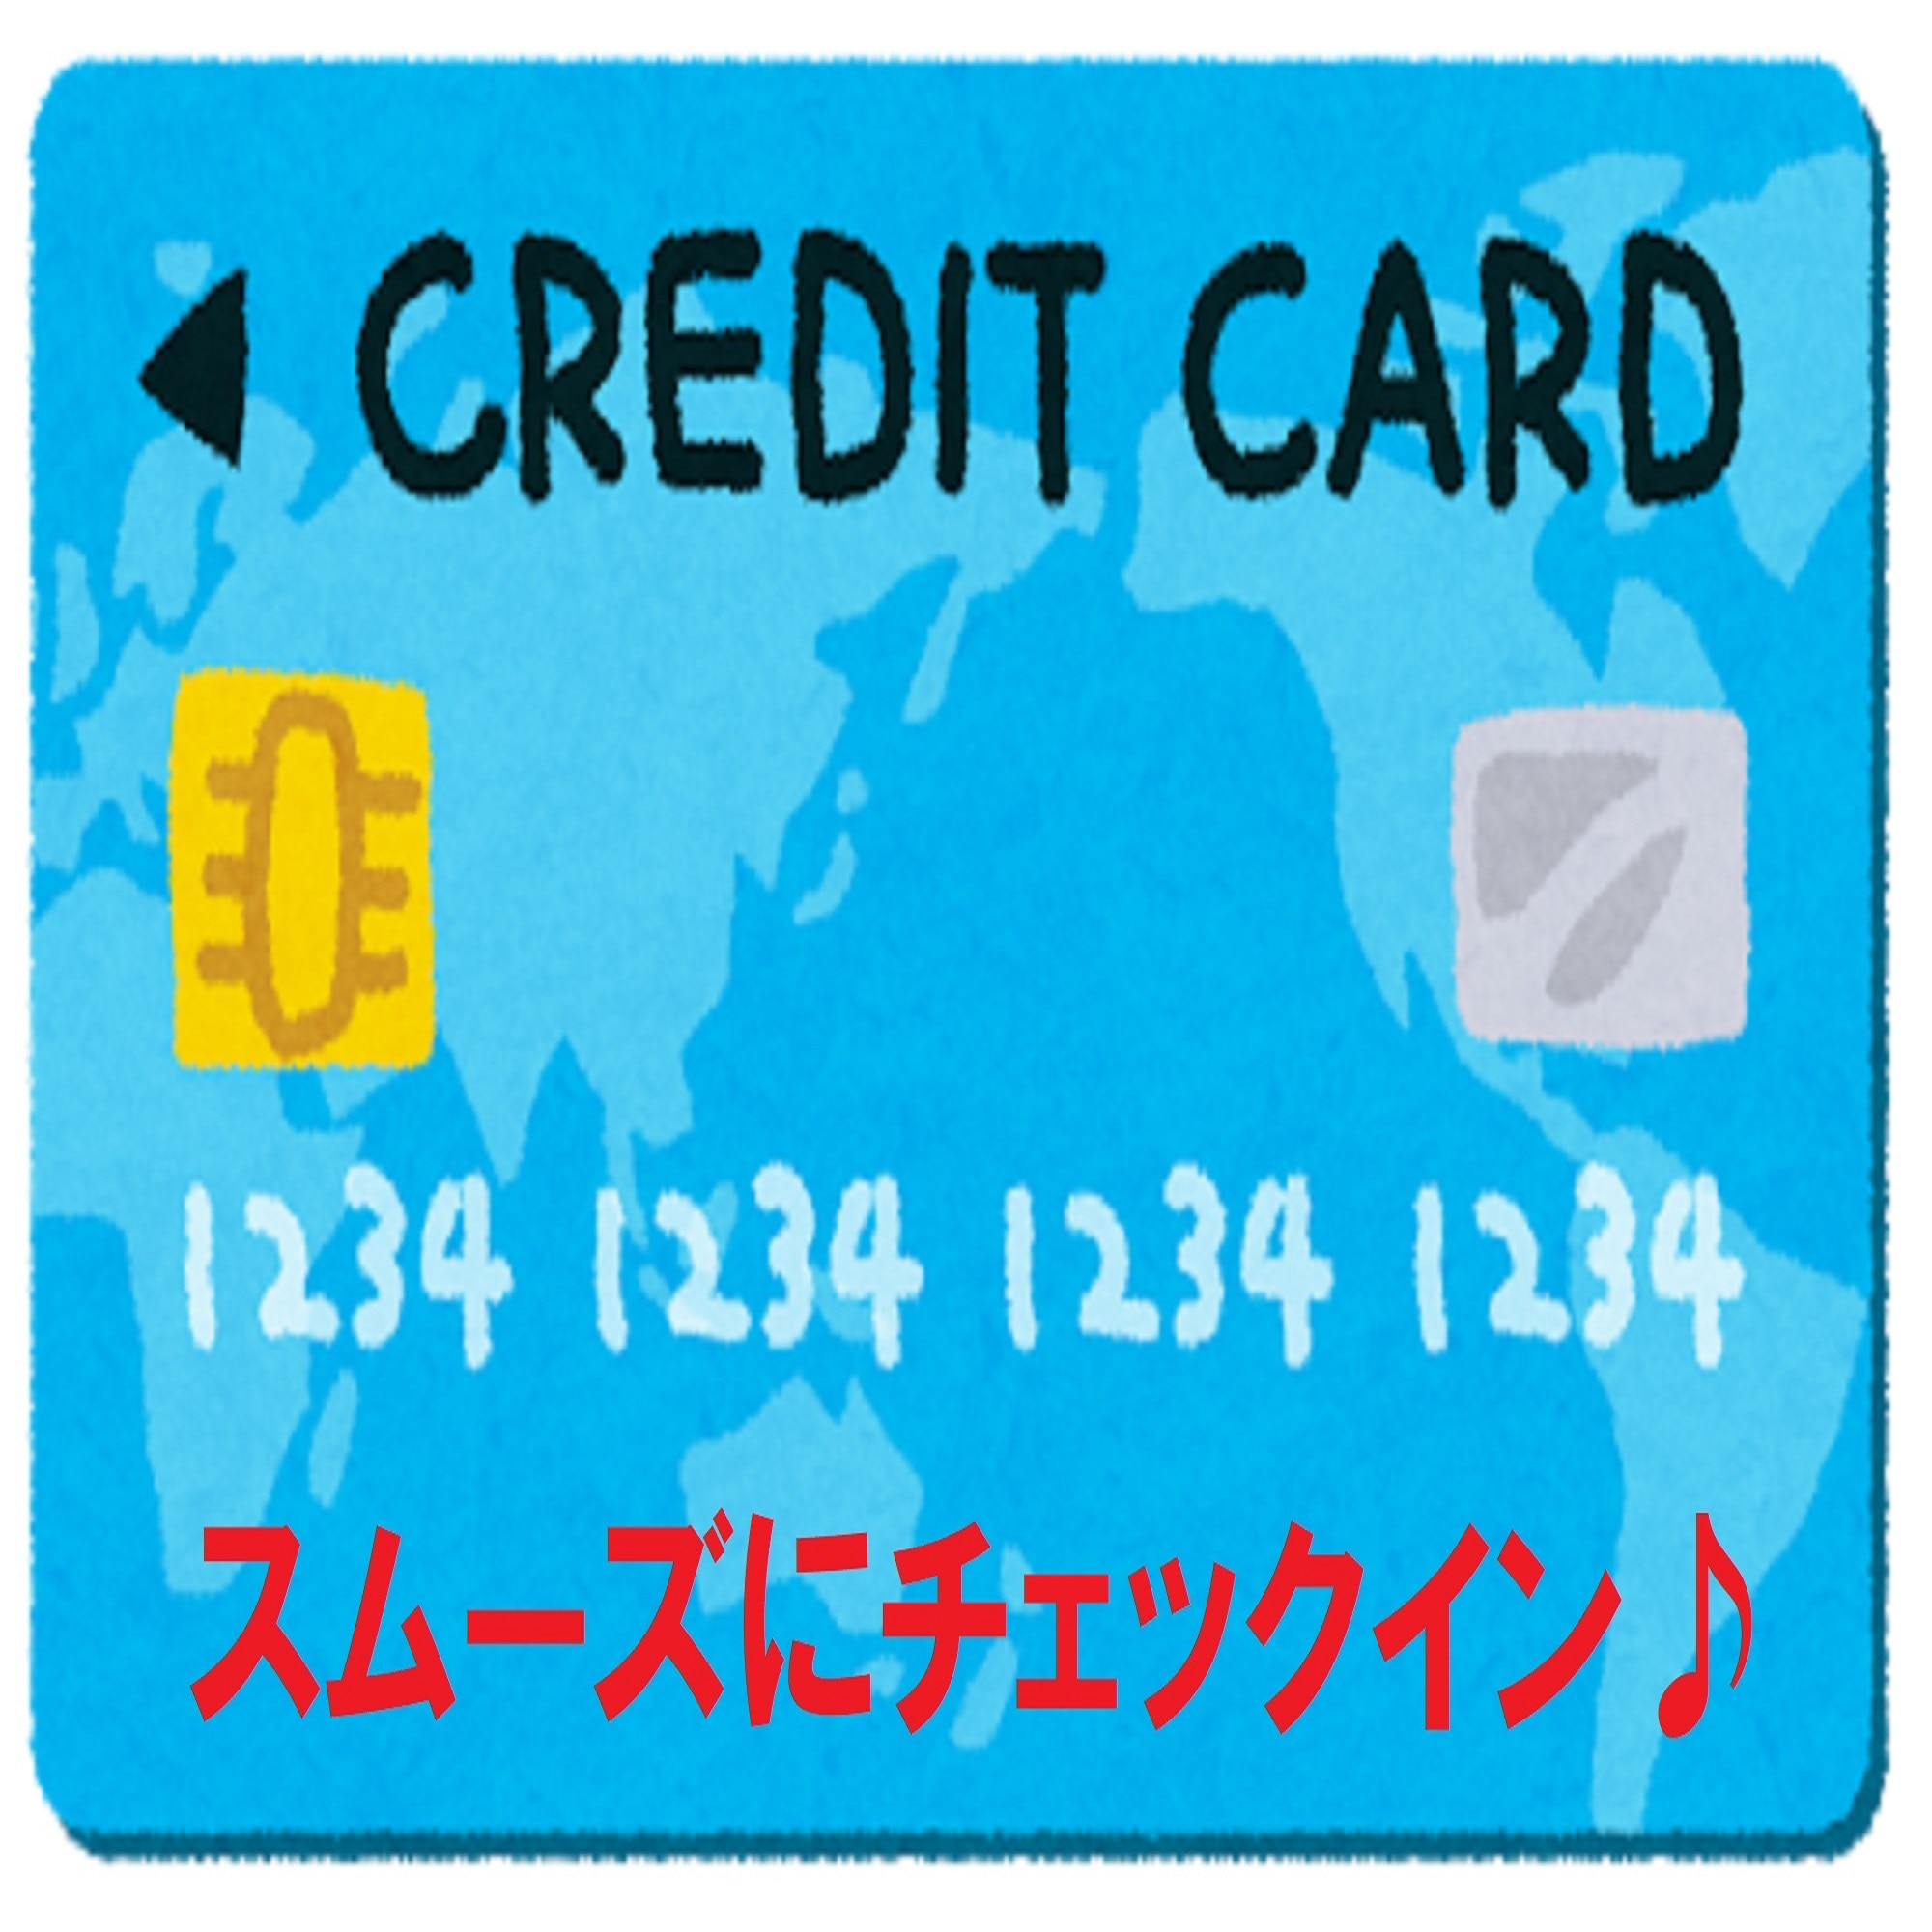 Online card payment plan